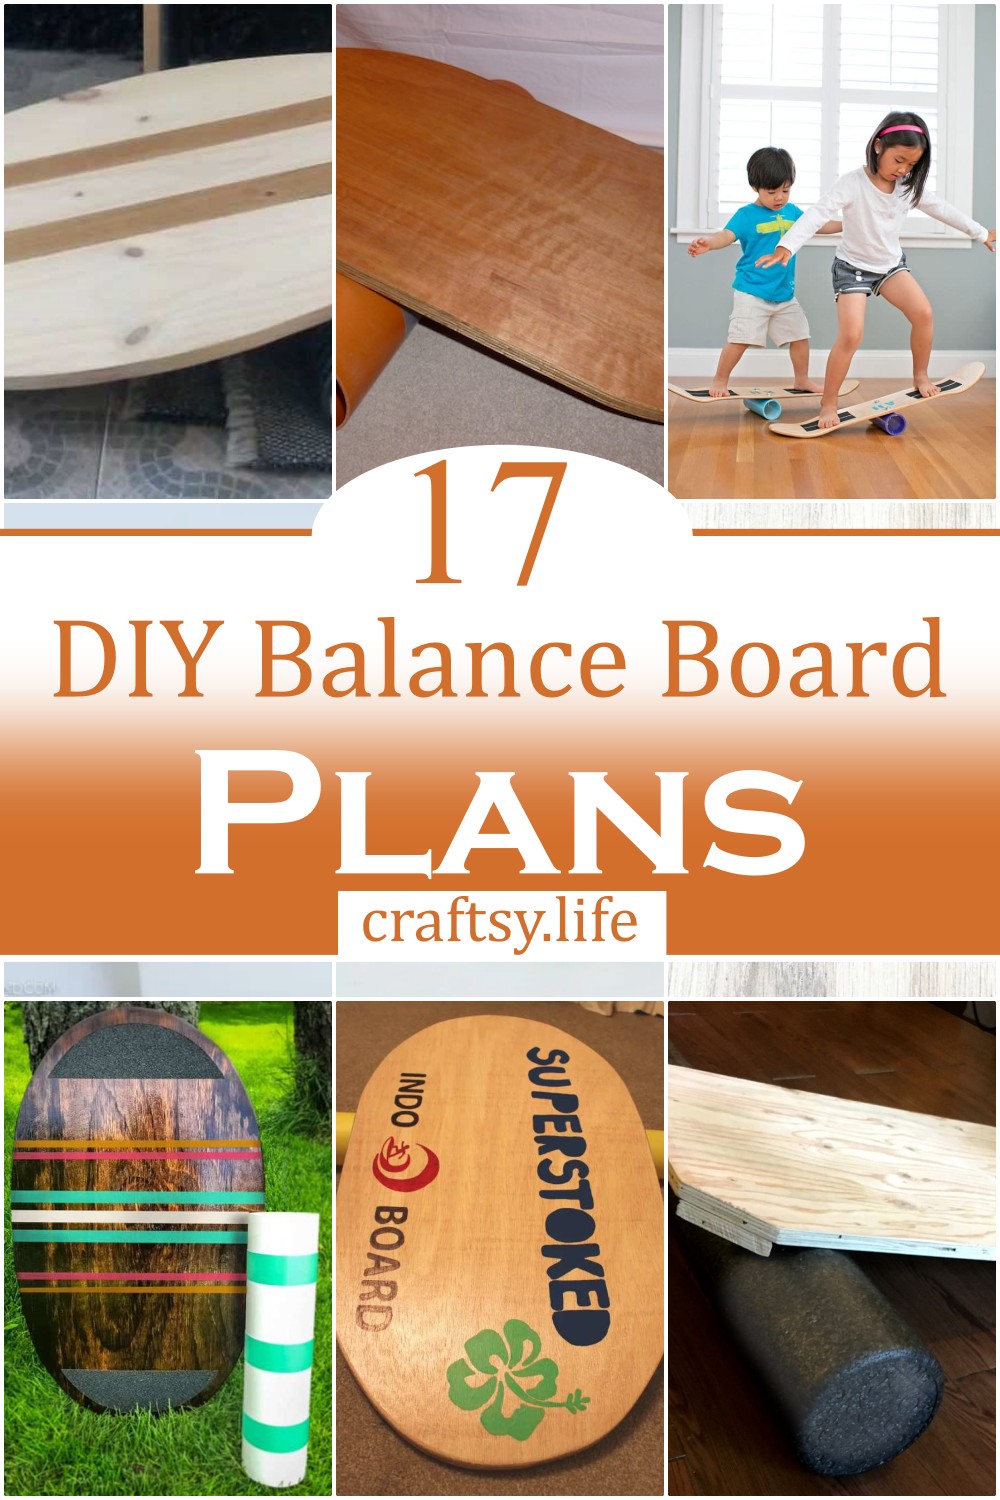 DIY Balance Board Plans